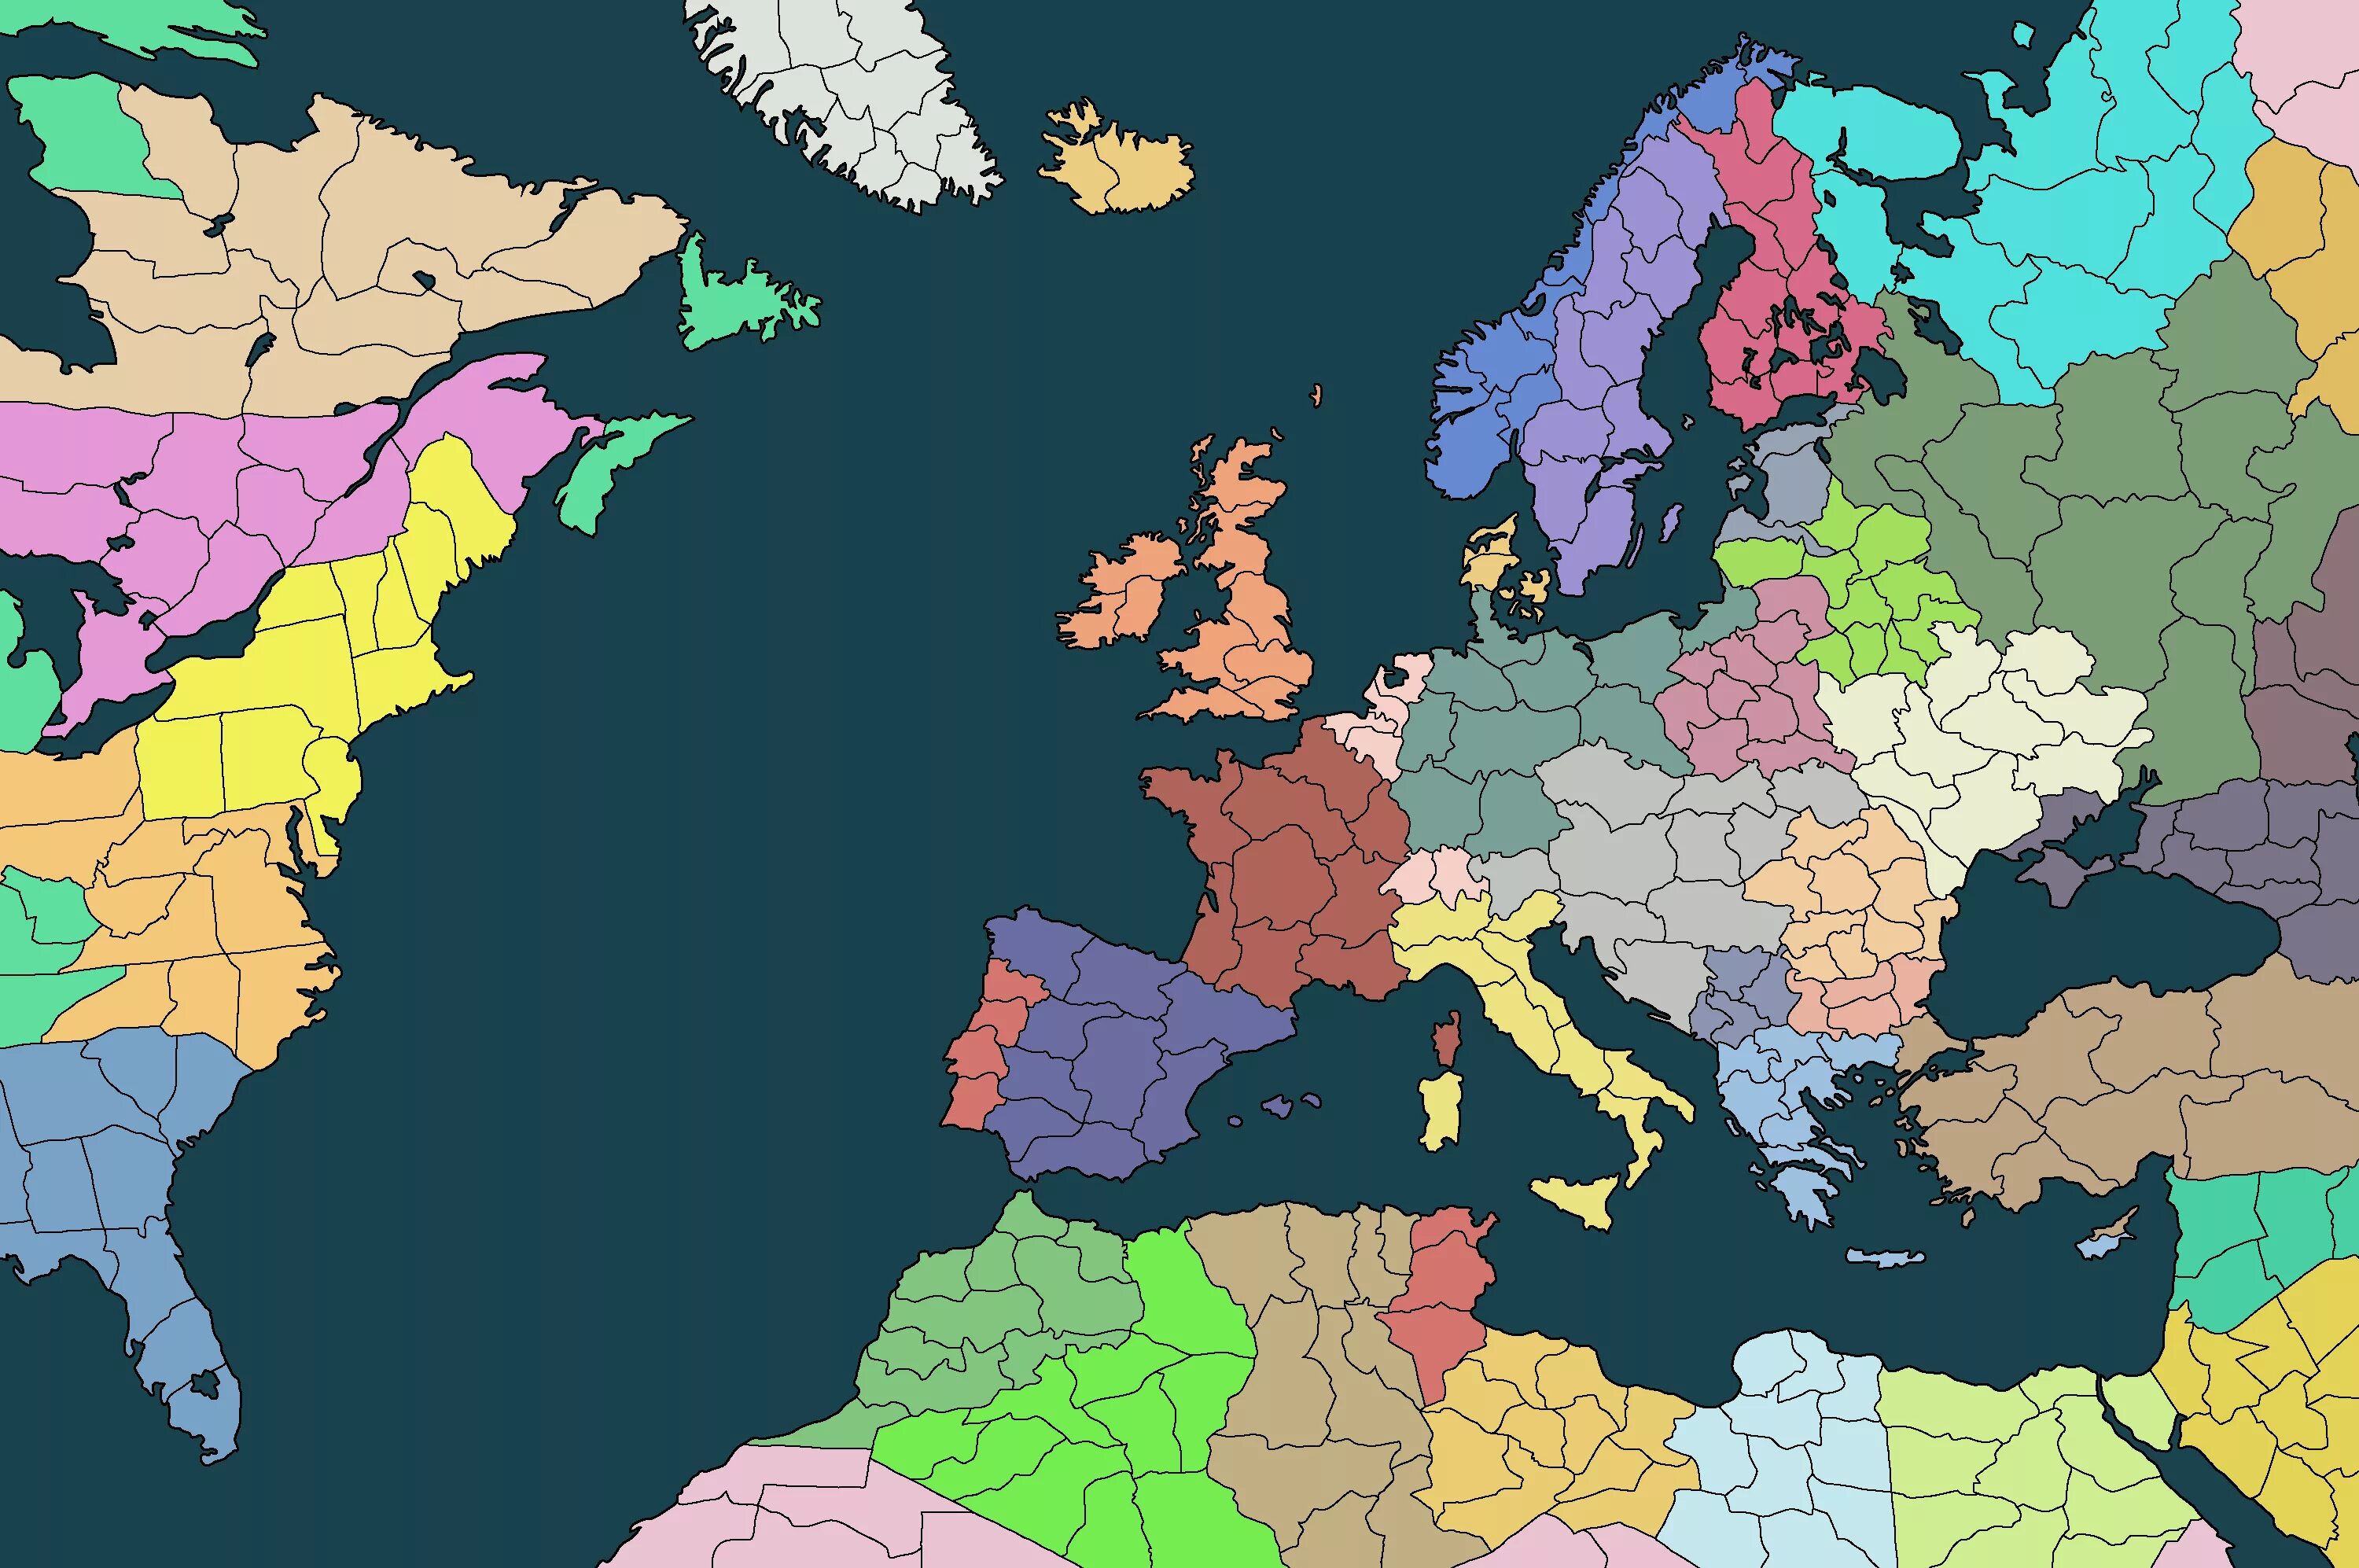 Maps for mapping. Supremacy 1914 карта. Карта Европы для ВПИ. Карта Европы 1936 с провинциями. Карта Европы в 1939 ВПИ.